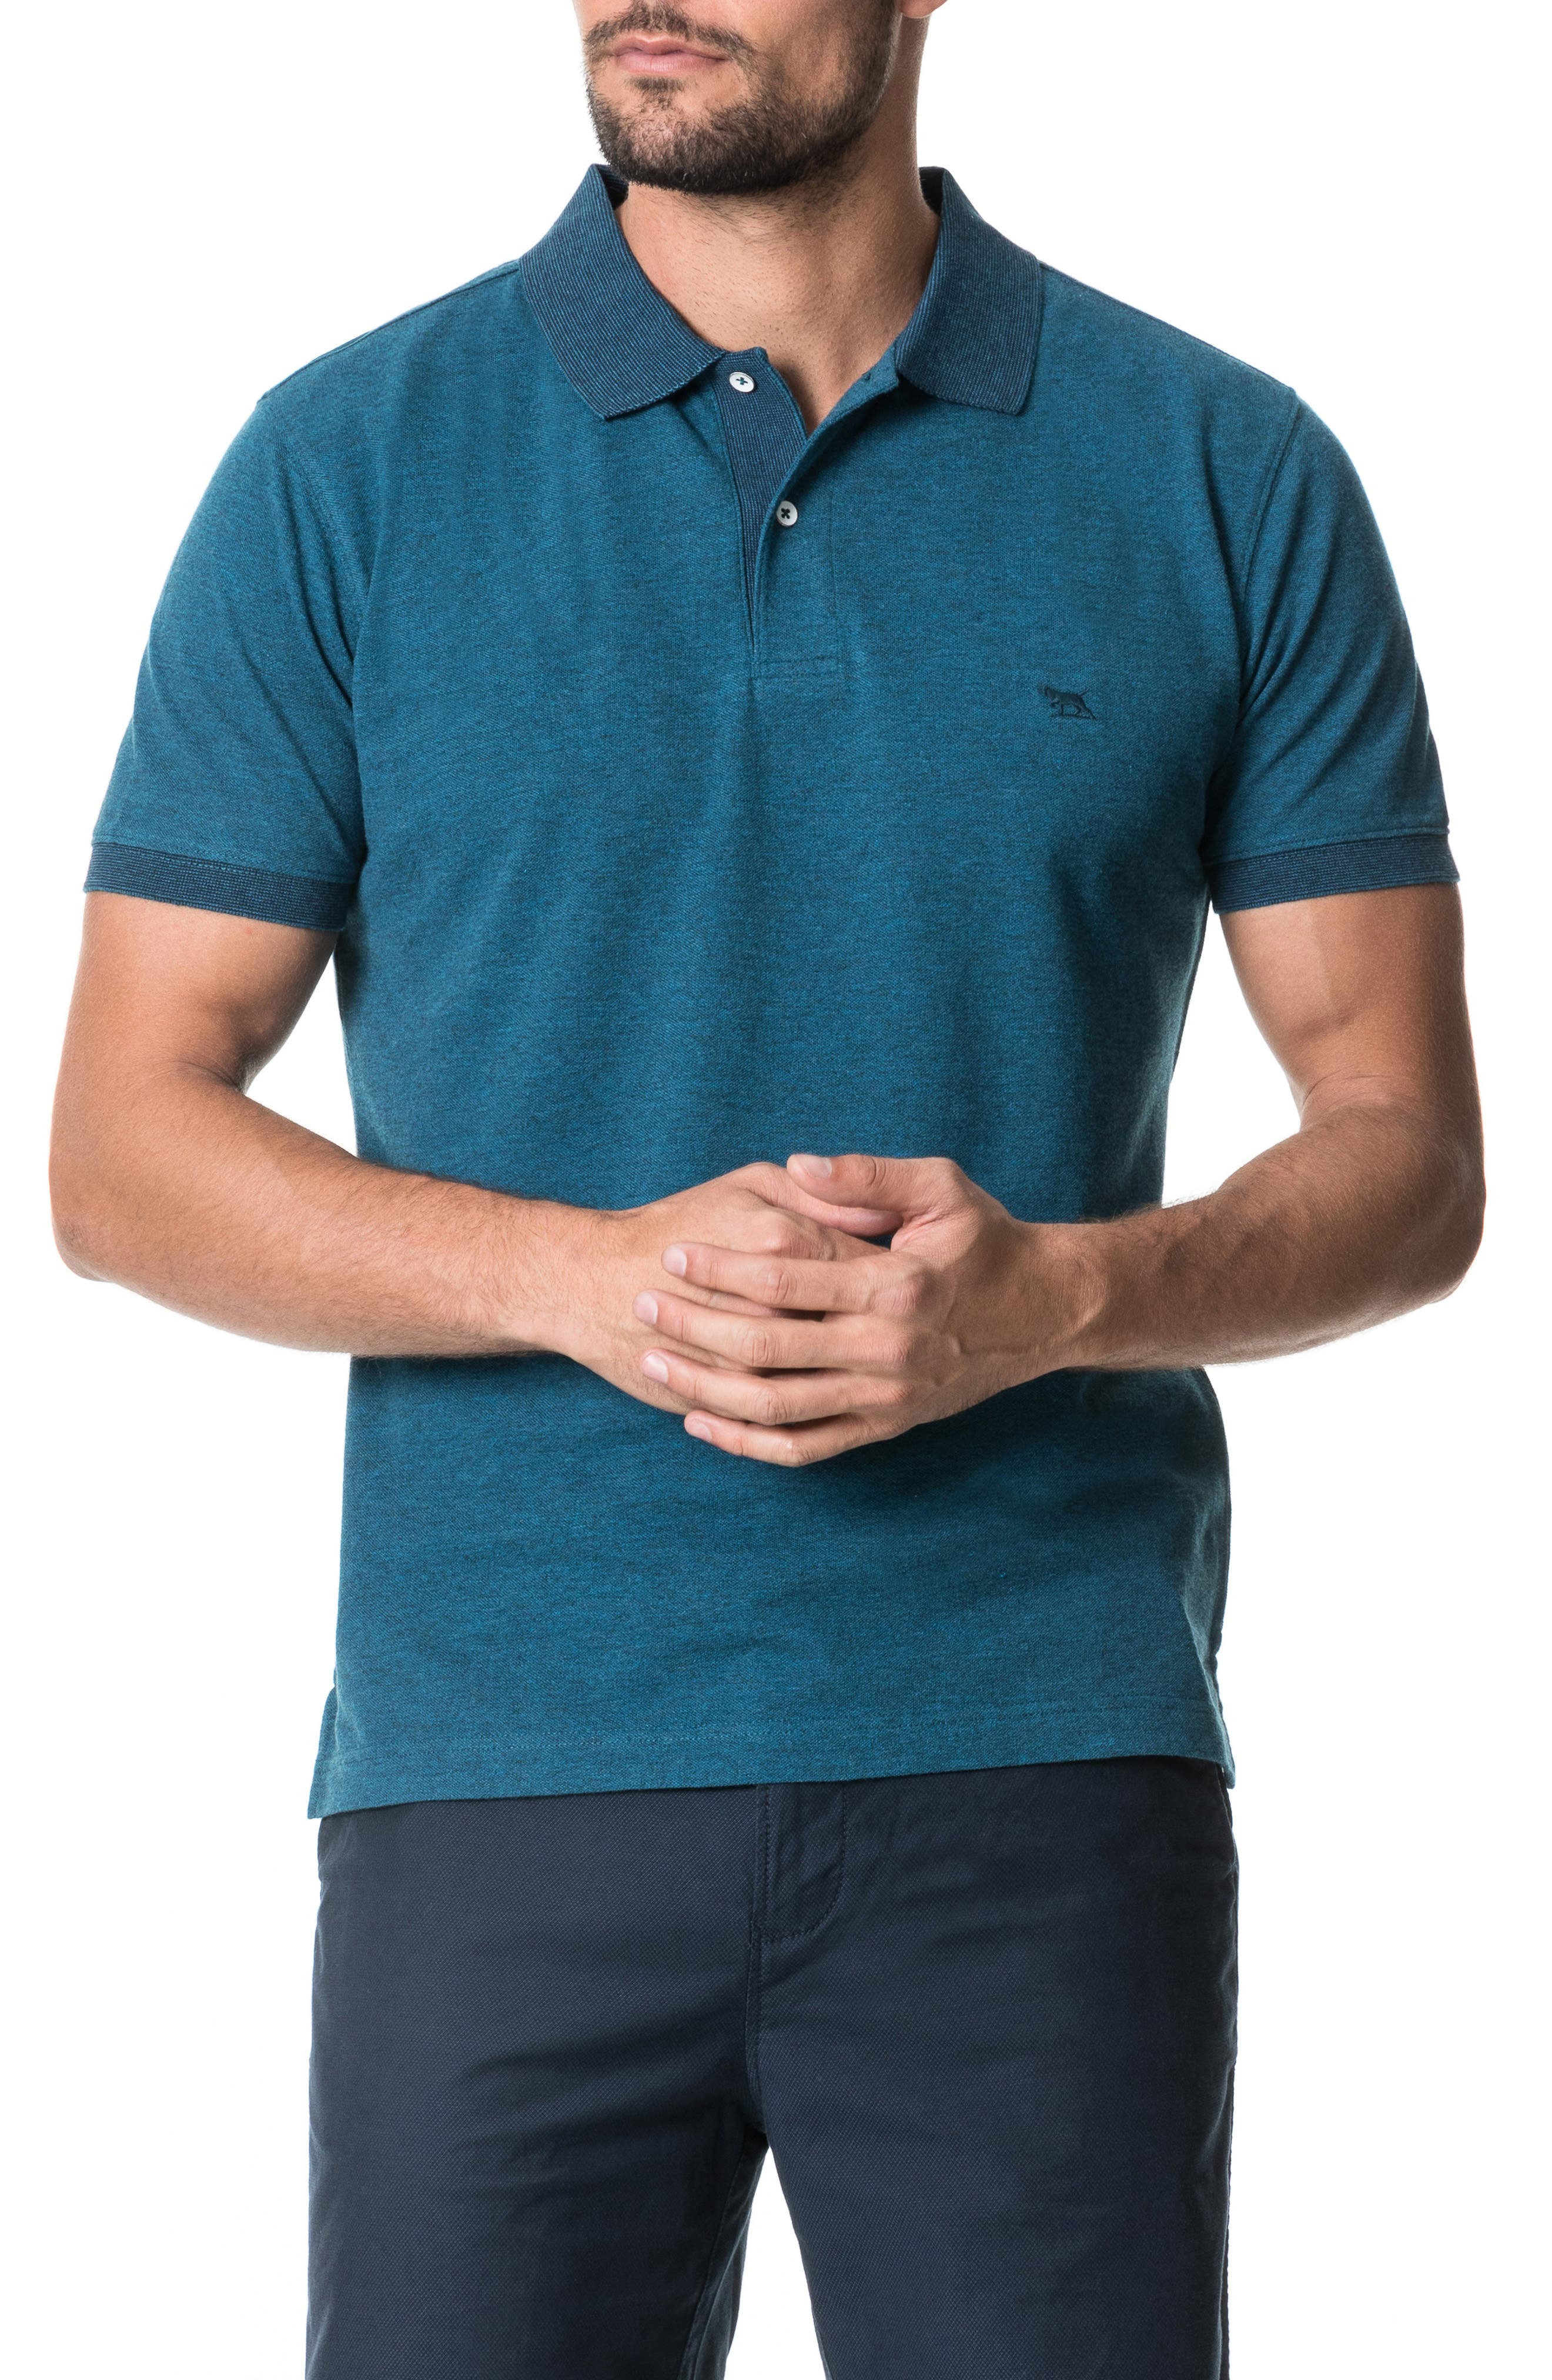 Mens Classic Polo Shirt 100% Cotton Short Sleeve Plain Pique Collared Tee Top